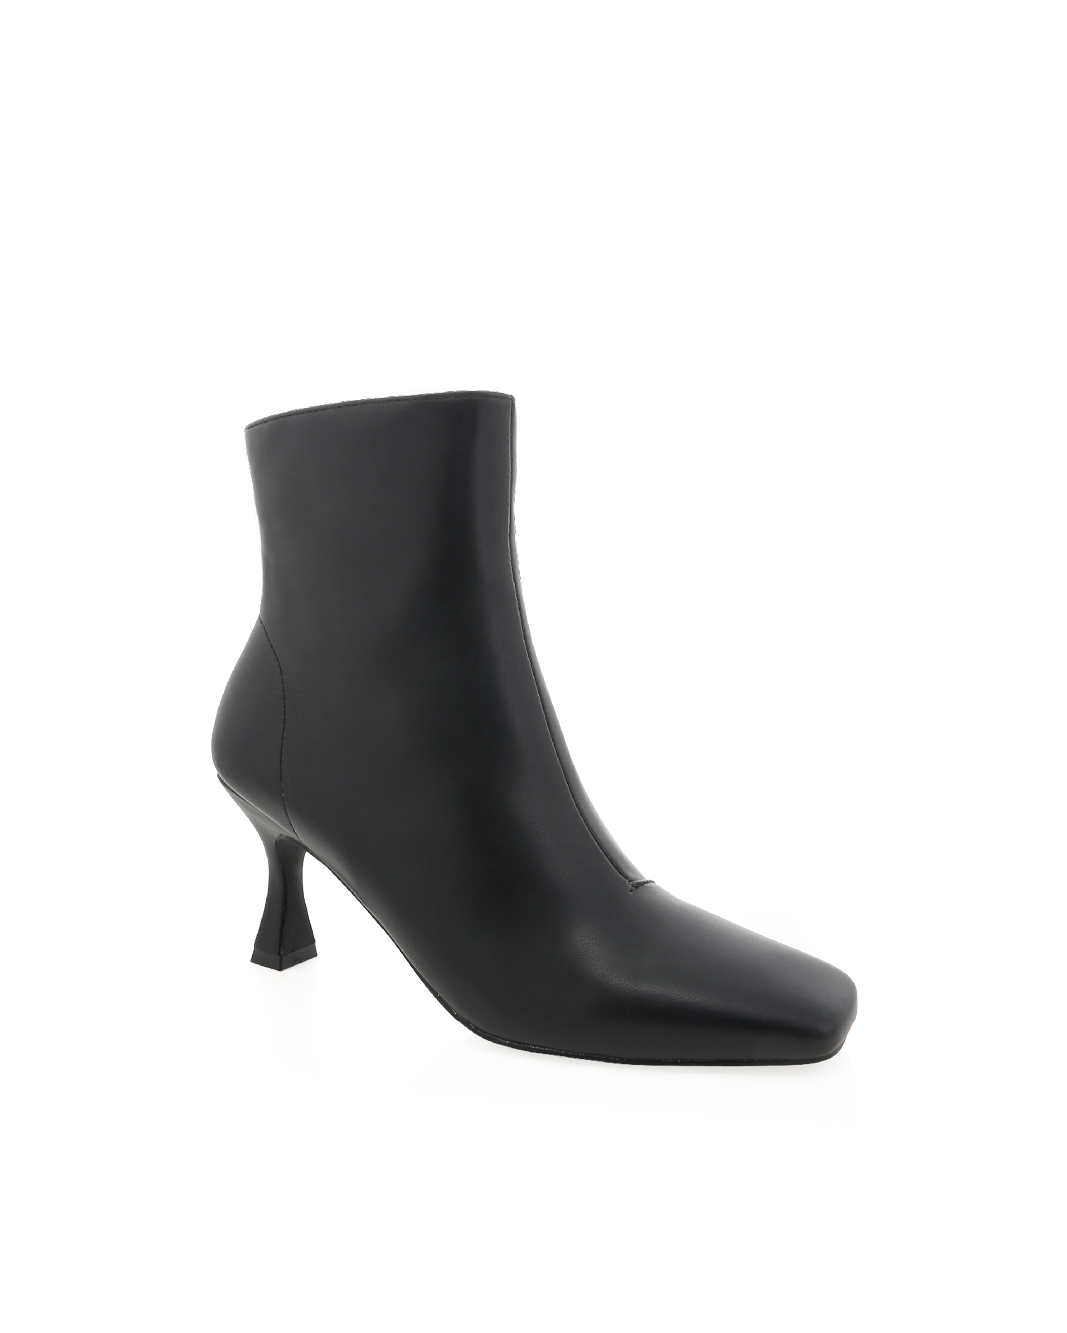 CHYANA - BLACK-Boots-Billini-BILLINI USA